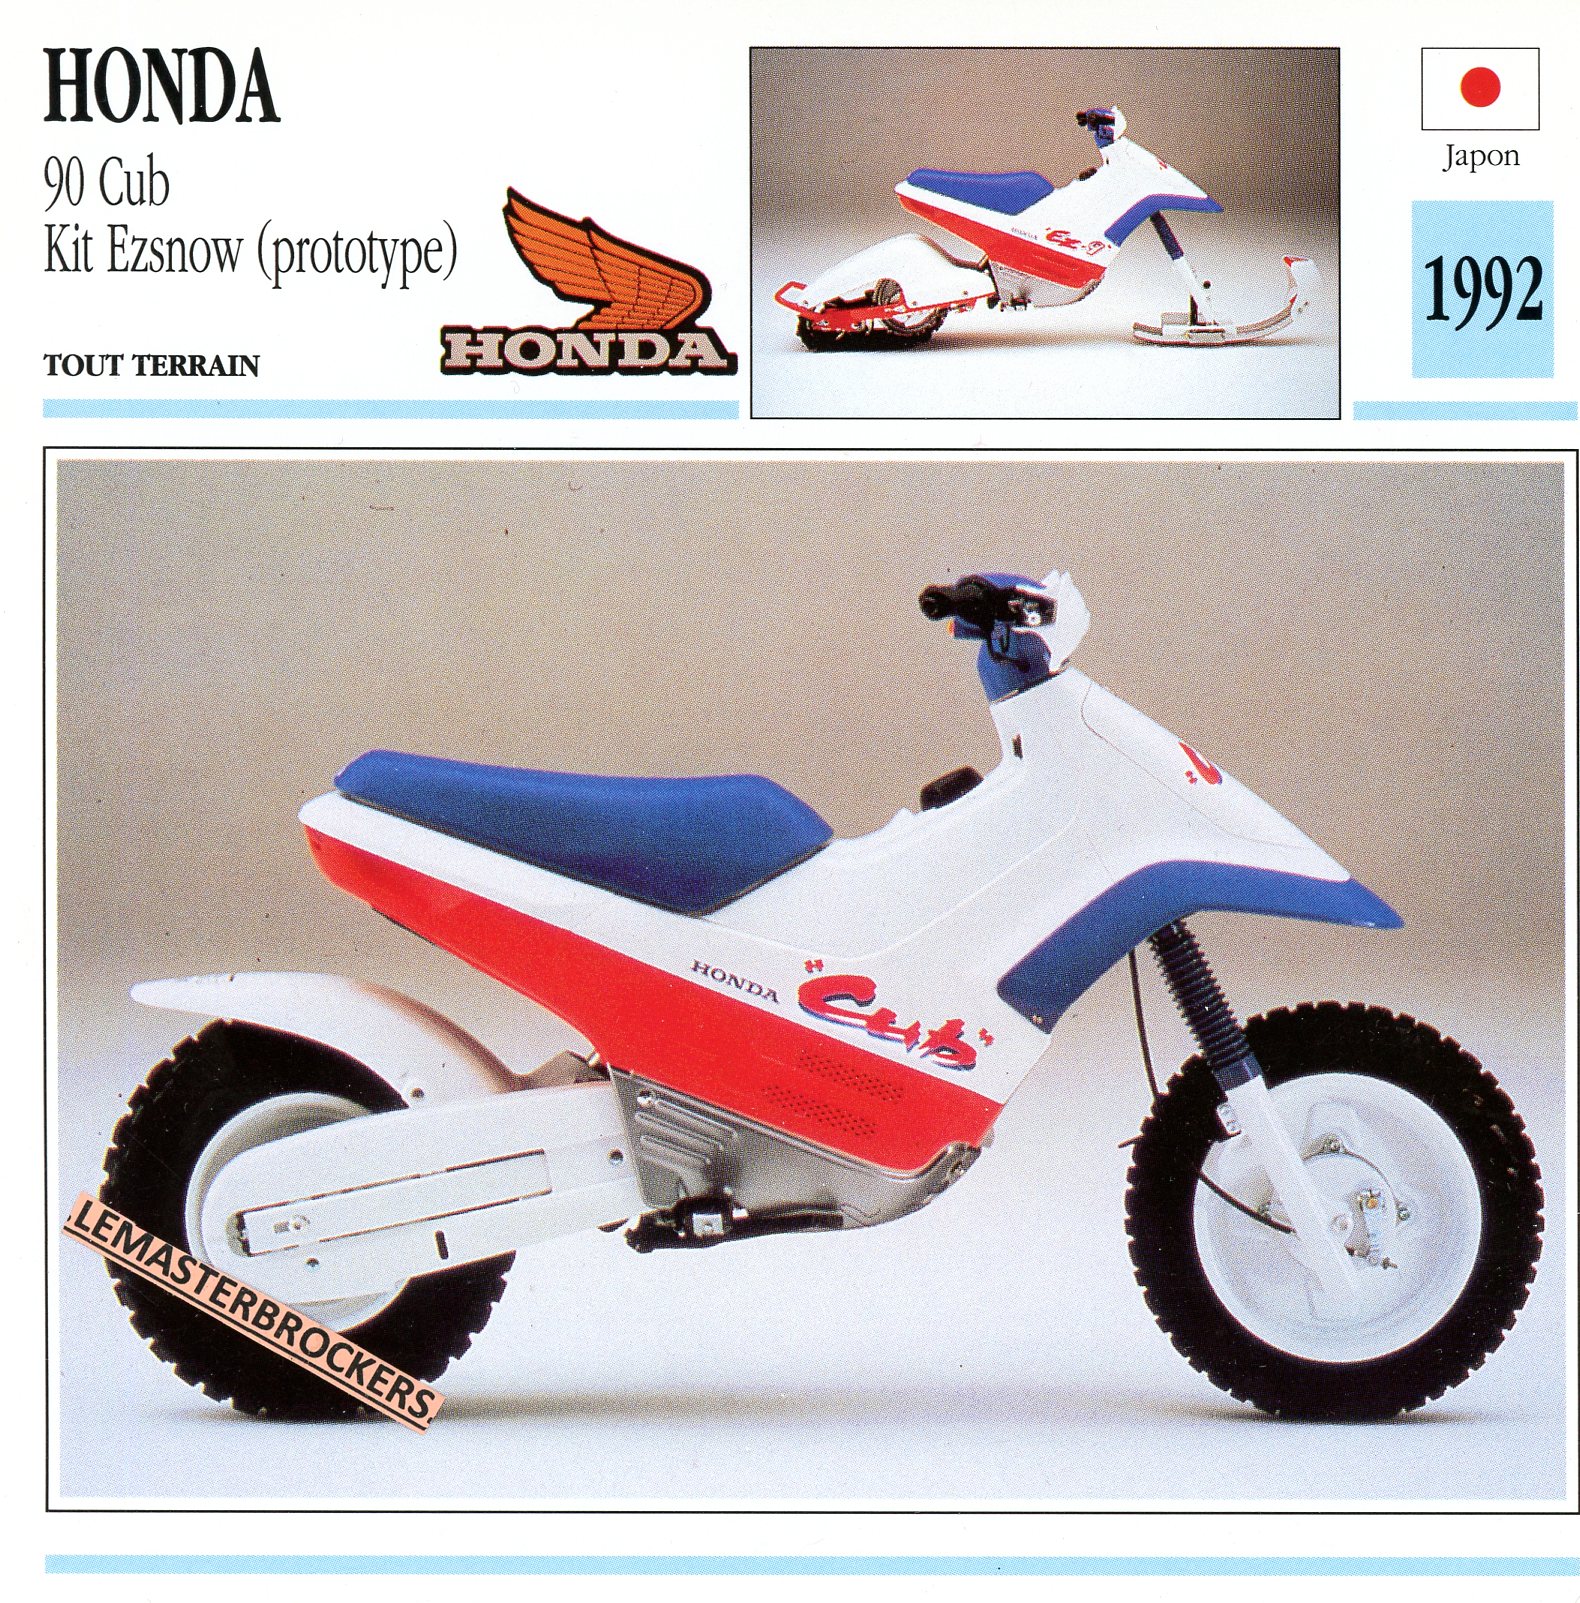 FICHE-MOTO-HONDA-CUB-EZSNOW-PROTOTYPE-1992-LEMASTERBROCKERS-CARS-MOTORCYCLE